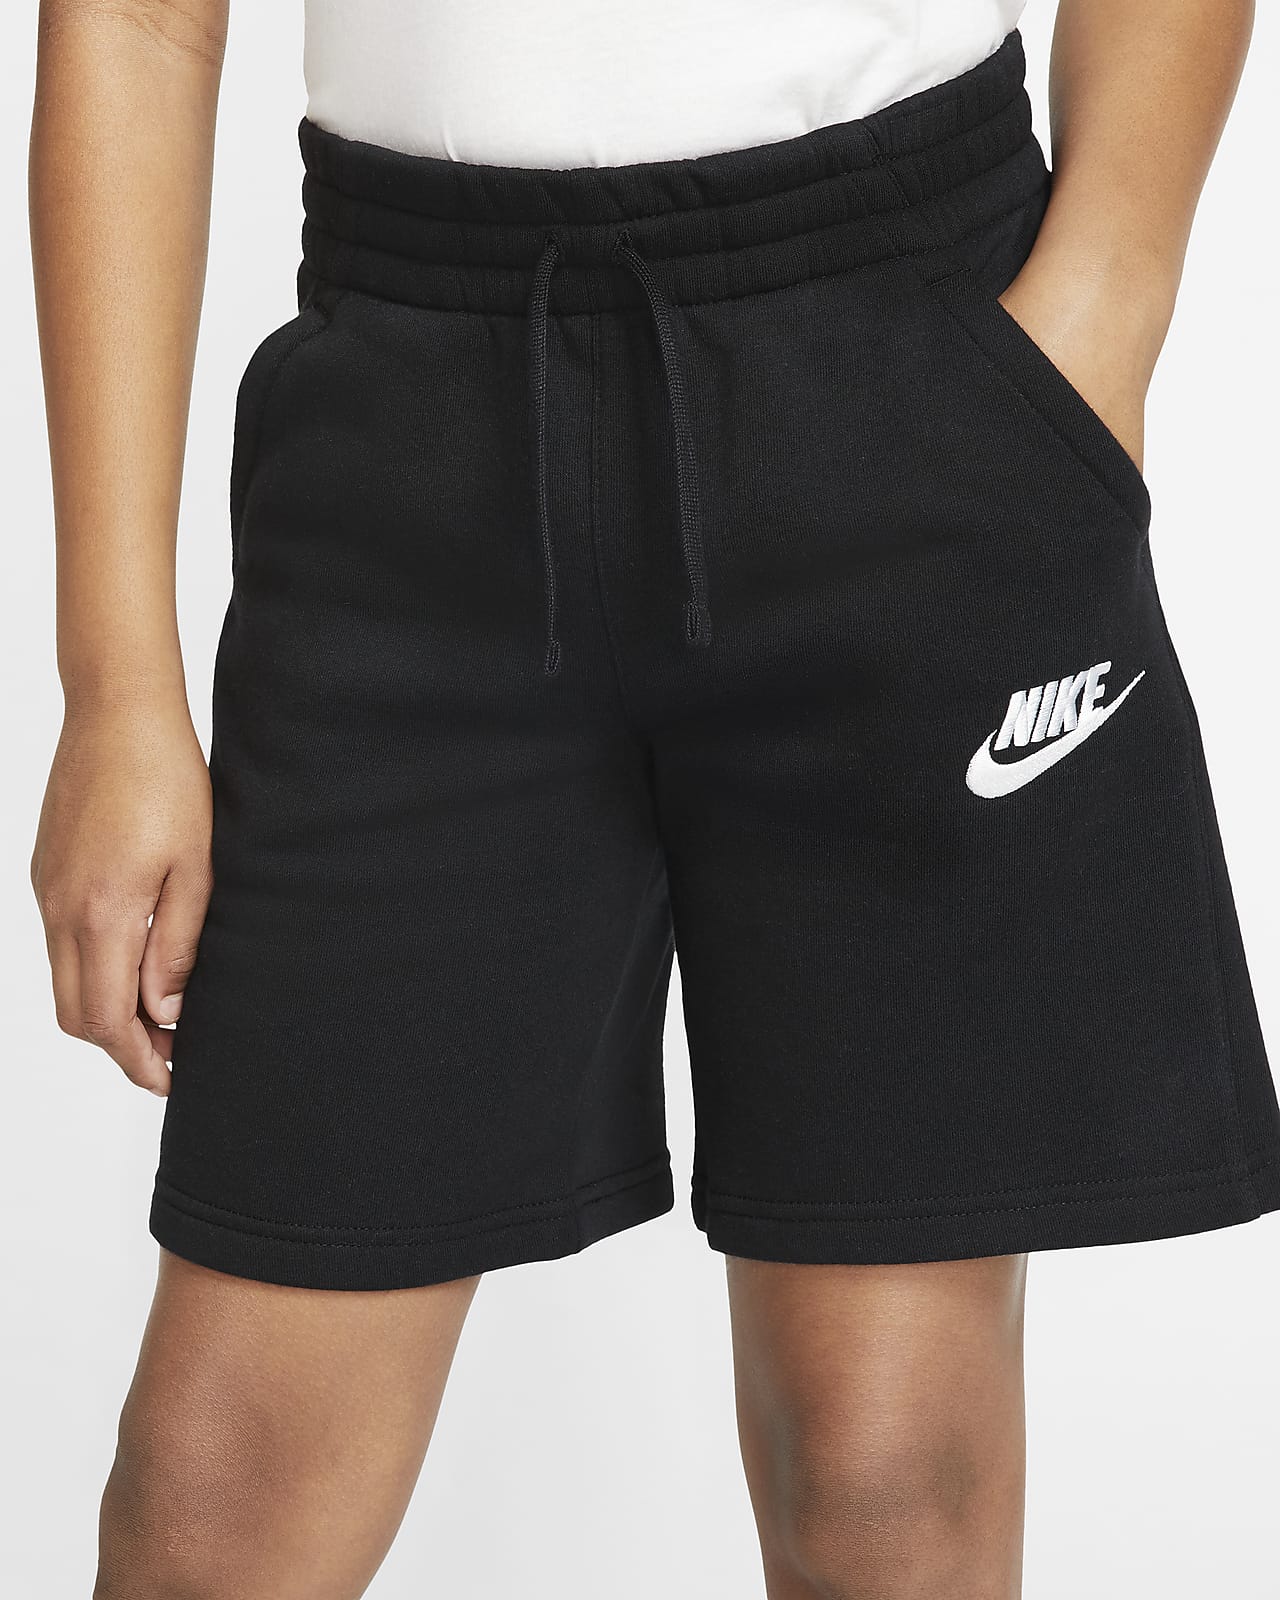 nike fleece shorts cheap